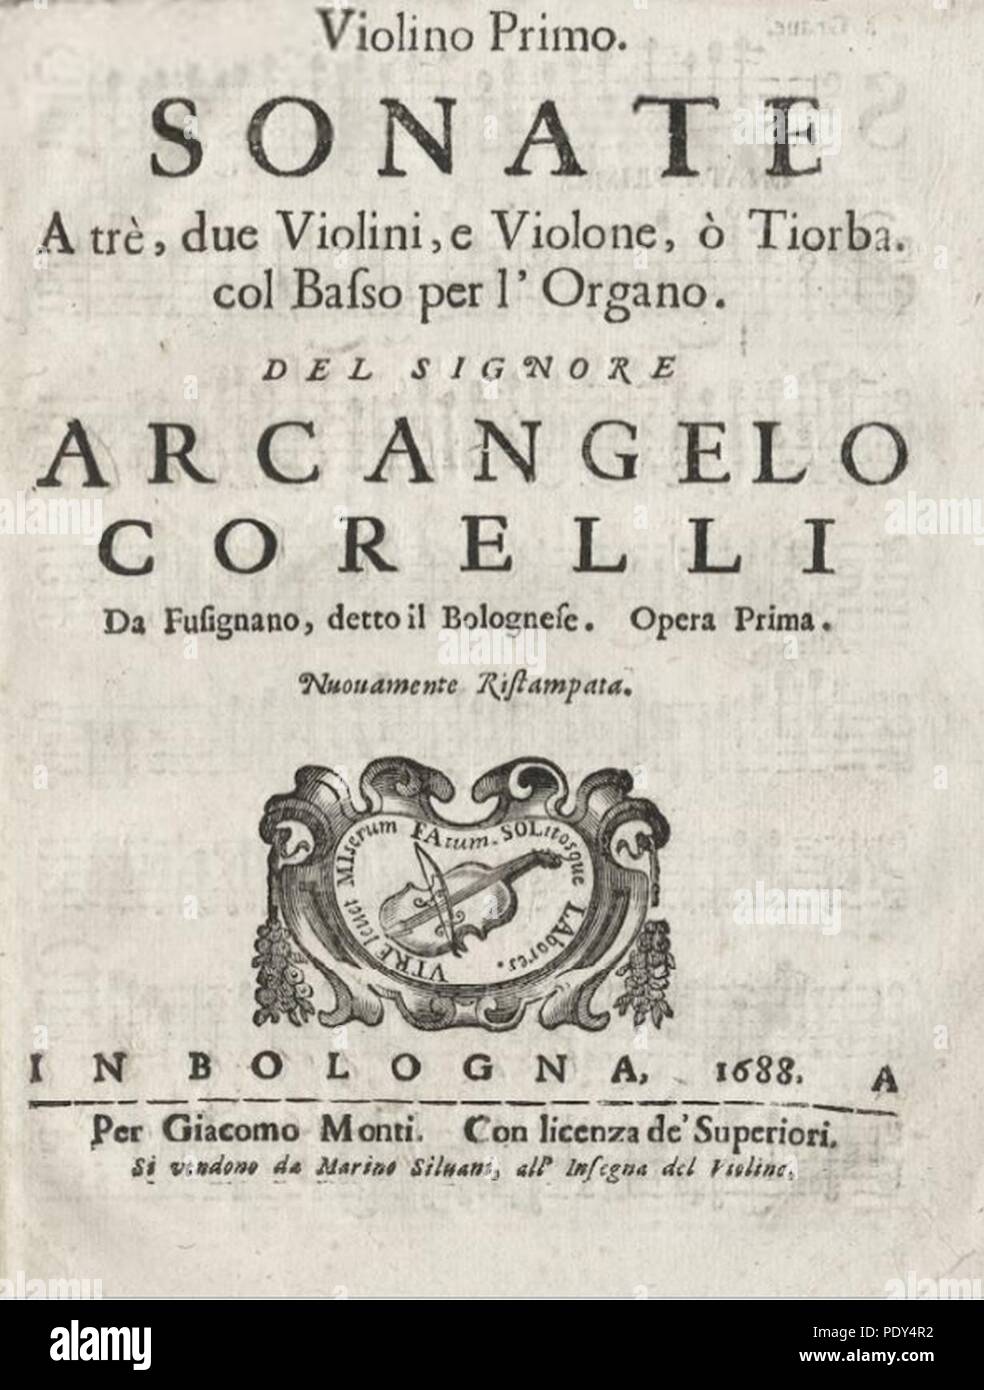 Arcangelo Corelli - Opera Prima. Stock Photo